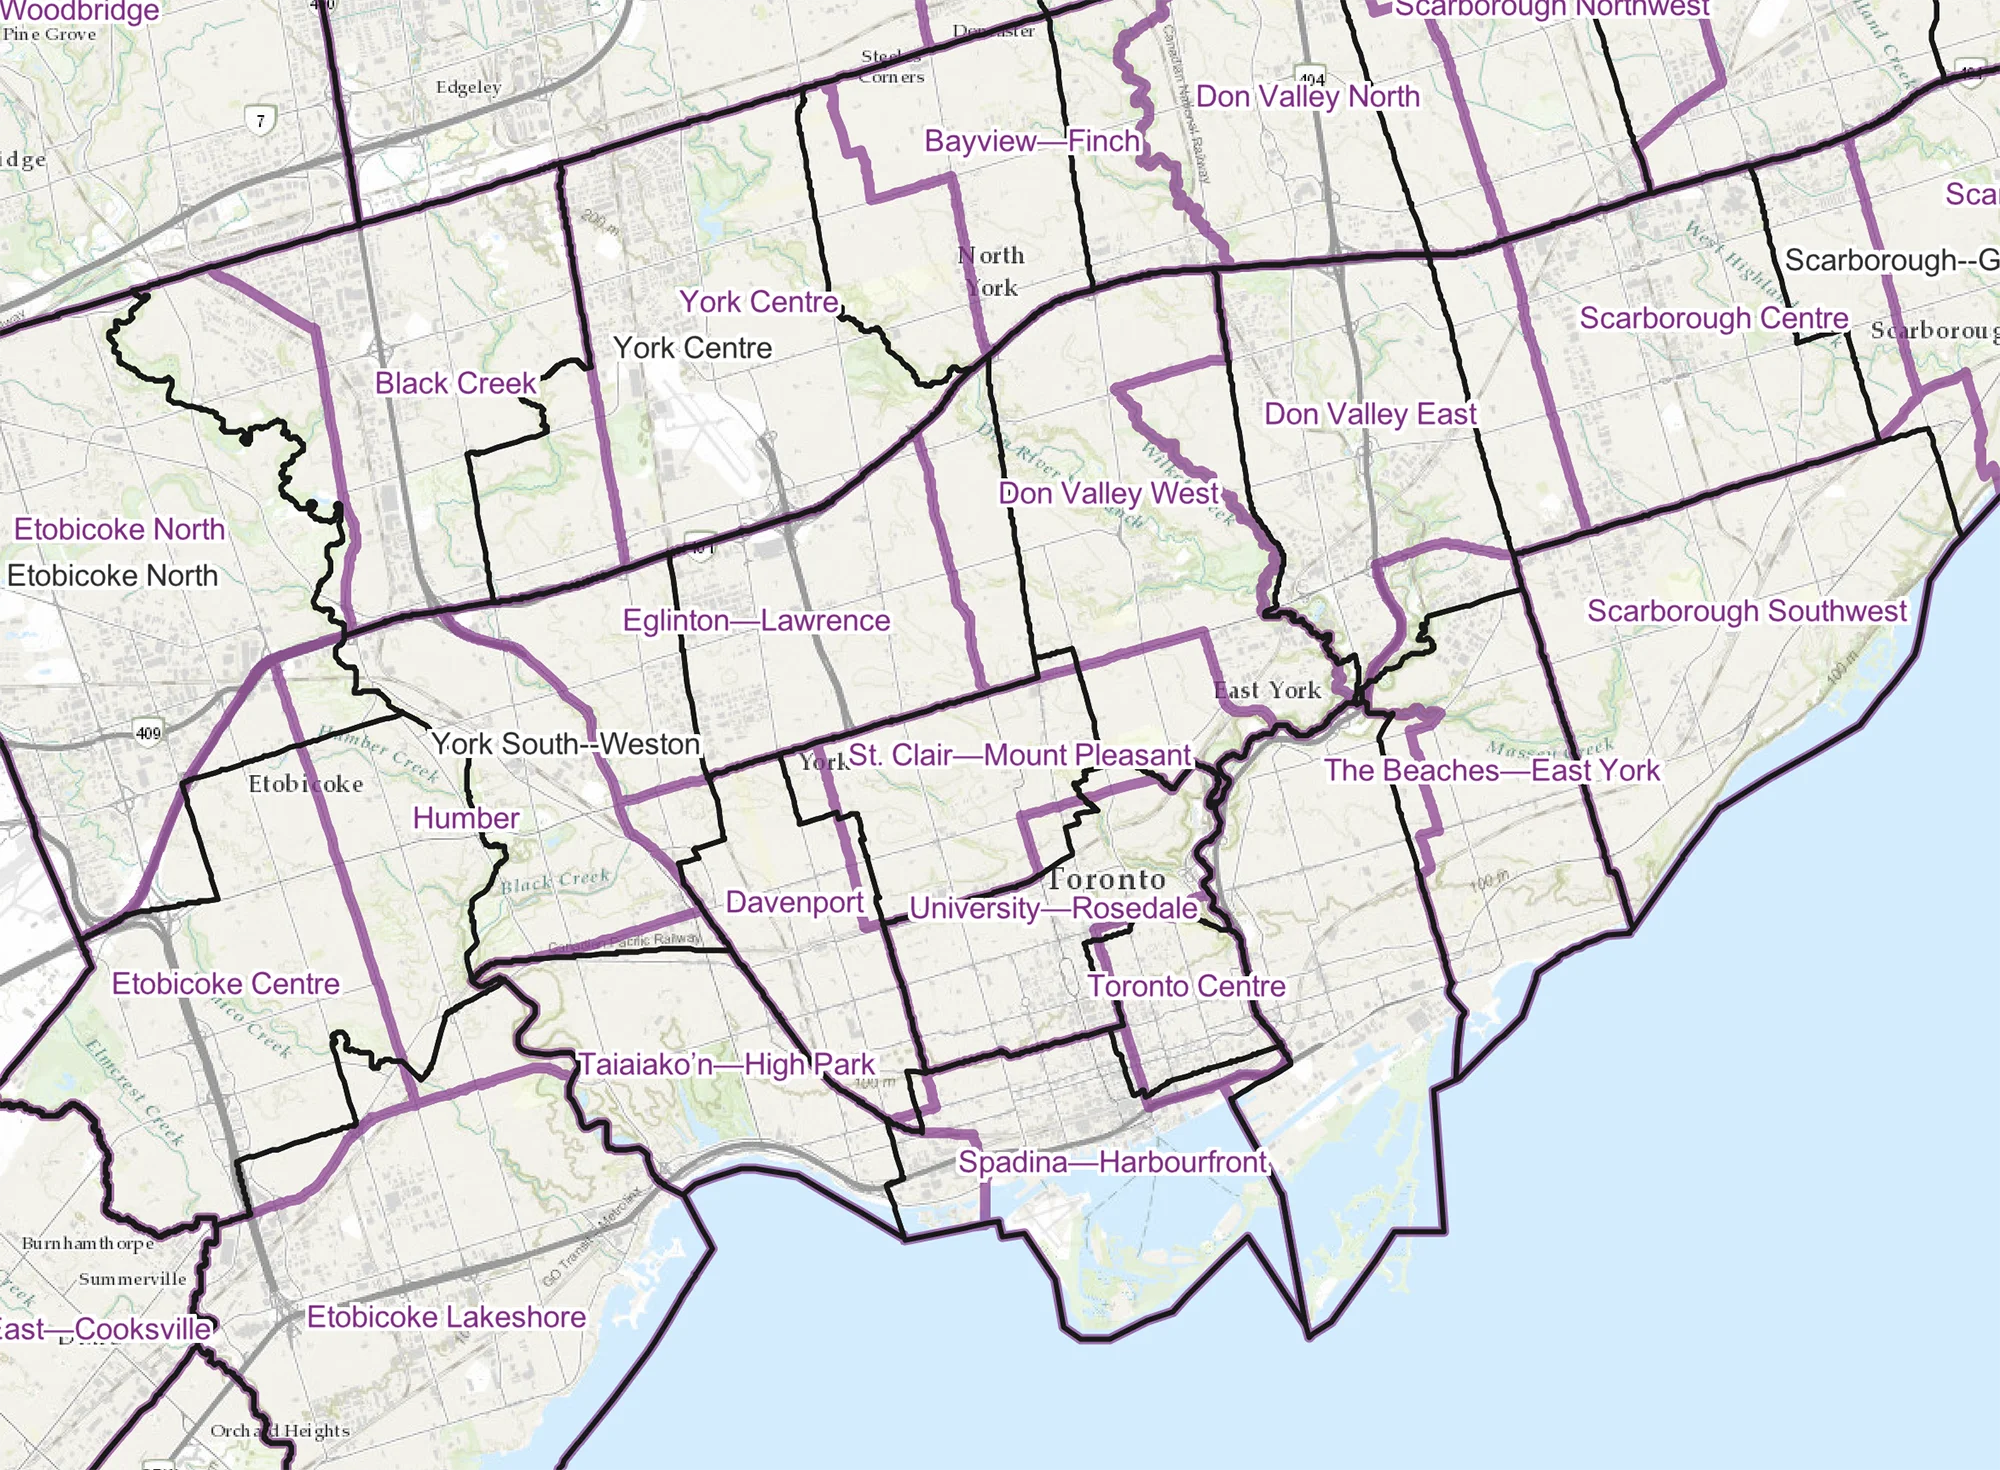 Toronto electoral map - proposed